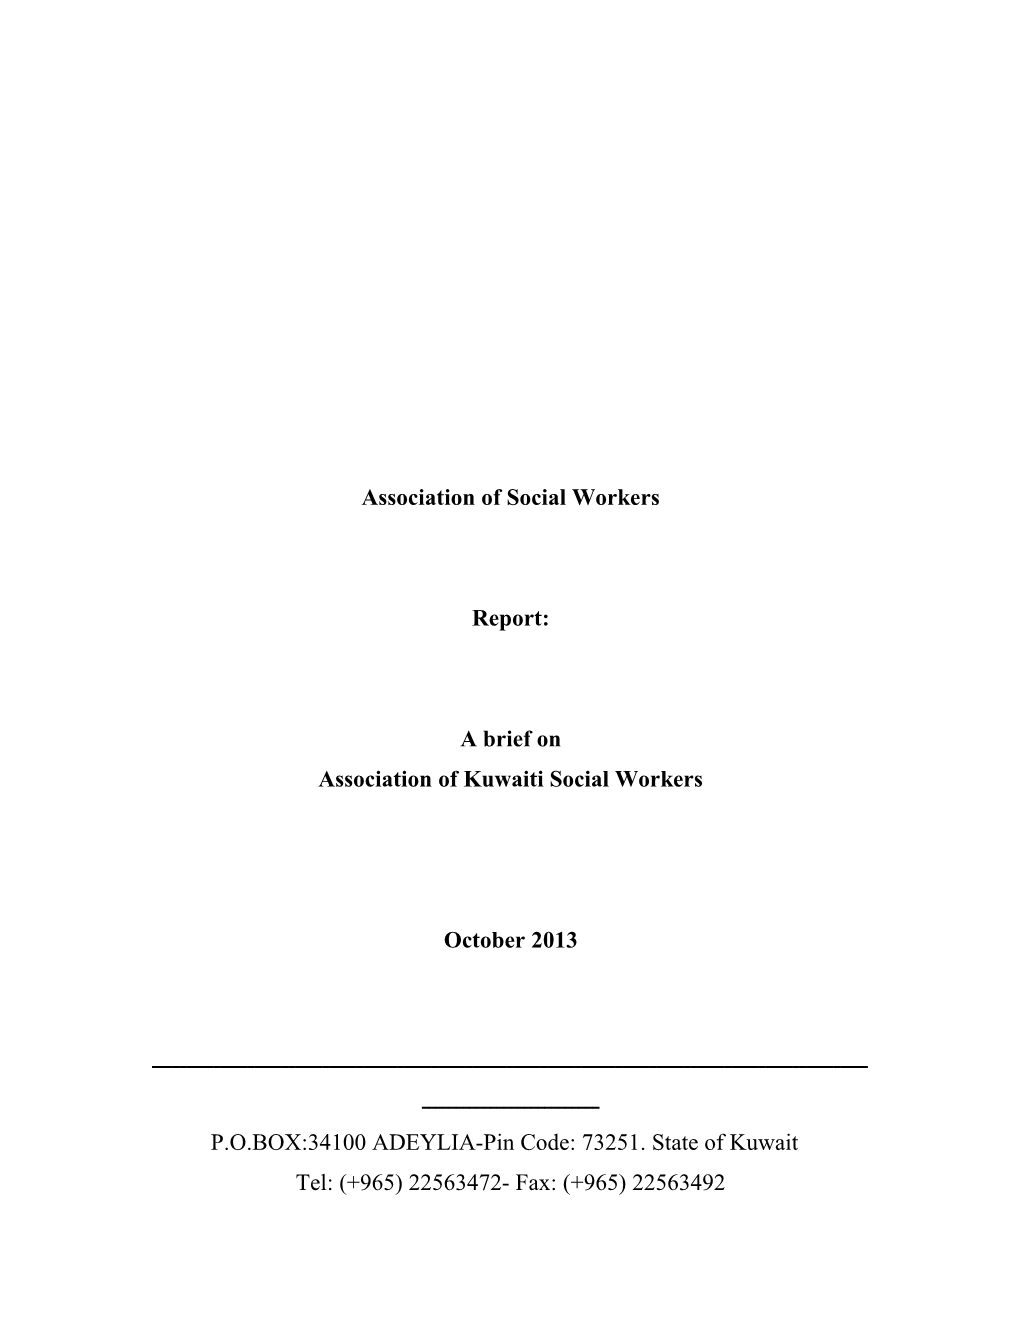 Association of Kuwaiti Social Workers